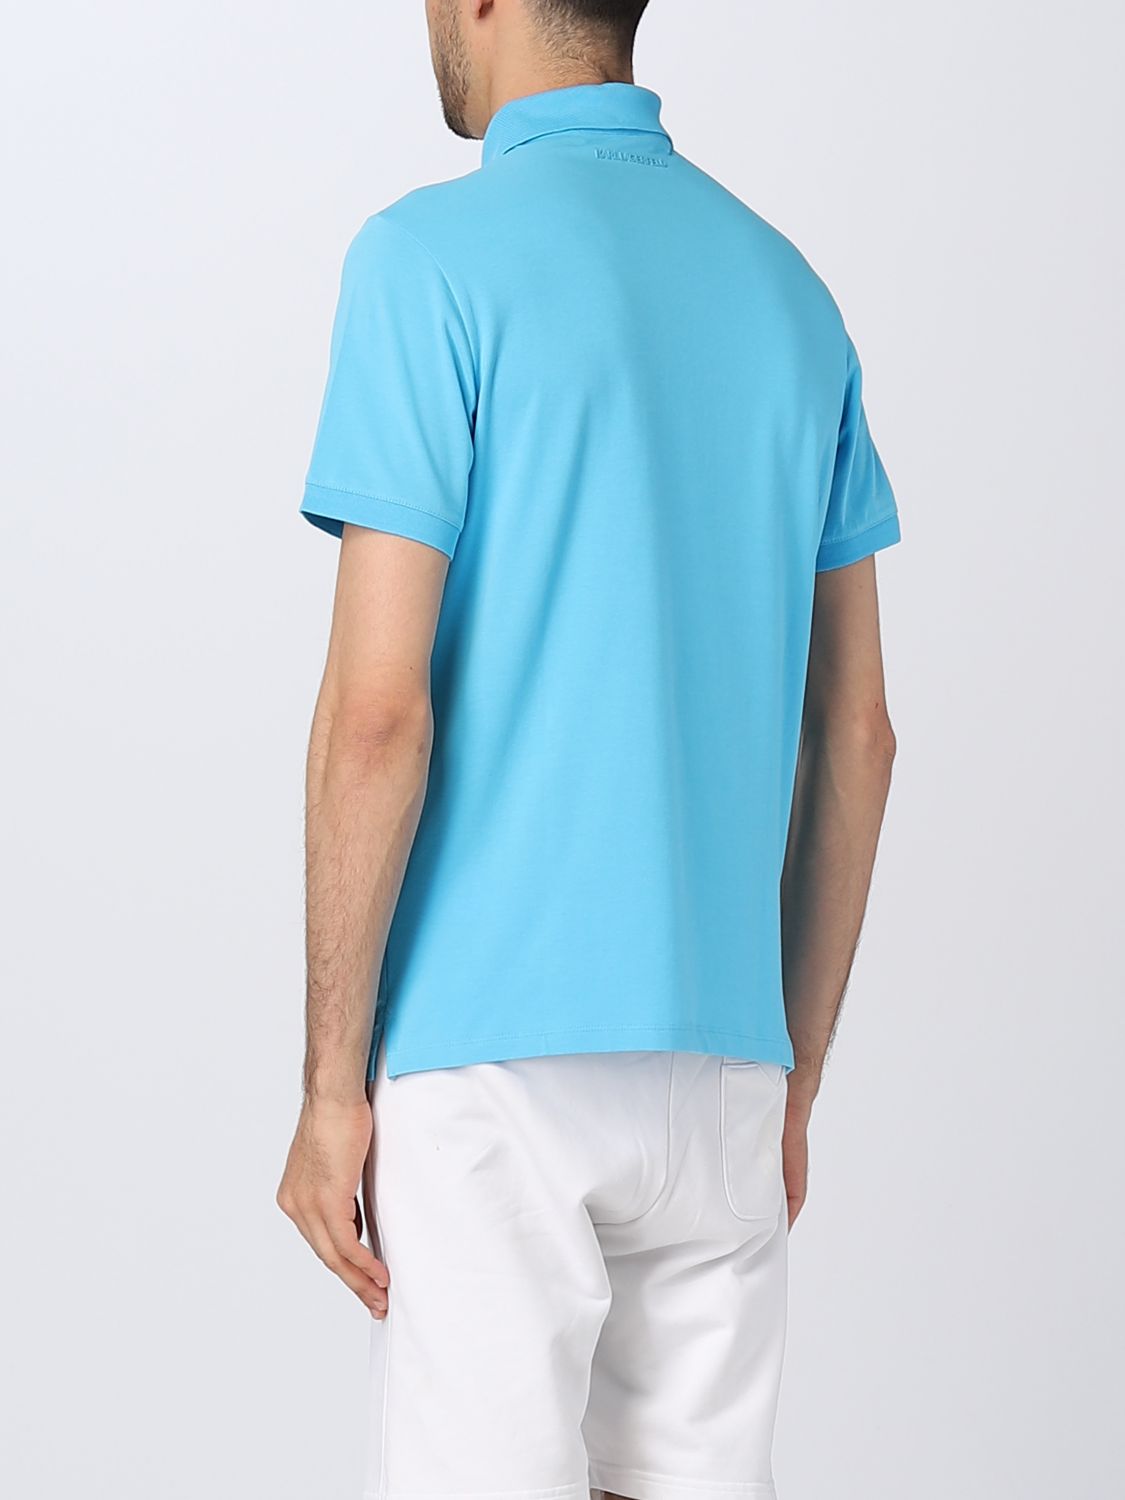 KARL LAGERFELD: polo shirt for man - Blue 1 | Karl Lagerfeld polo shirt ...